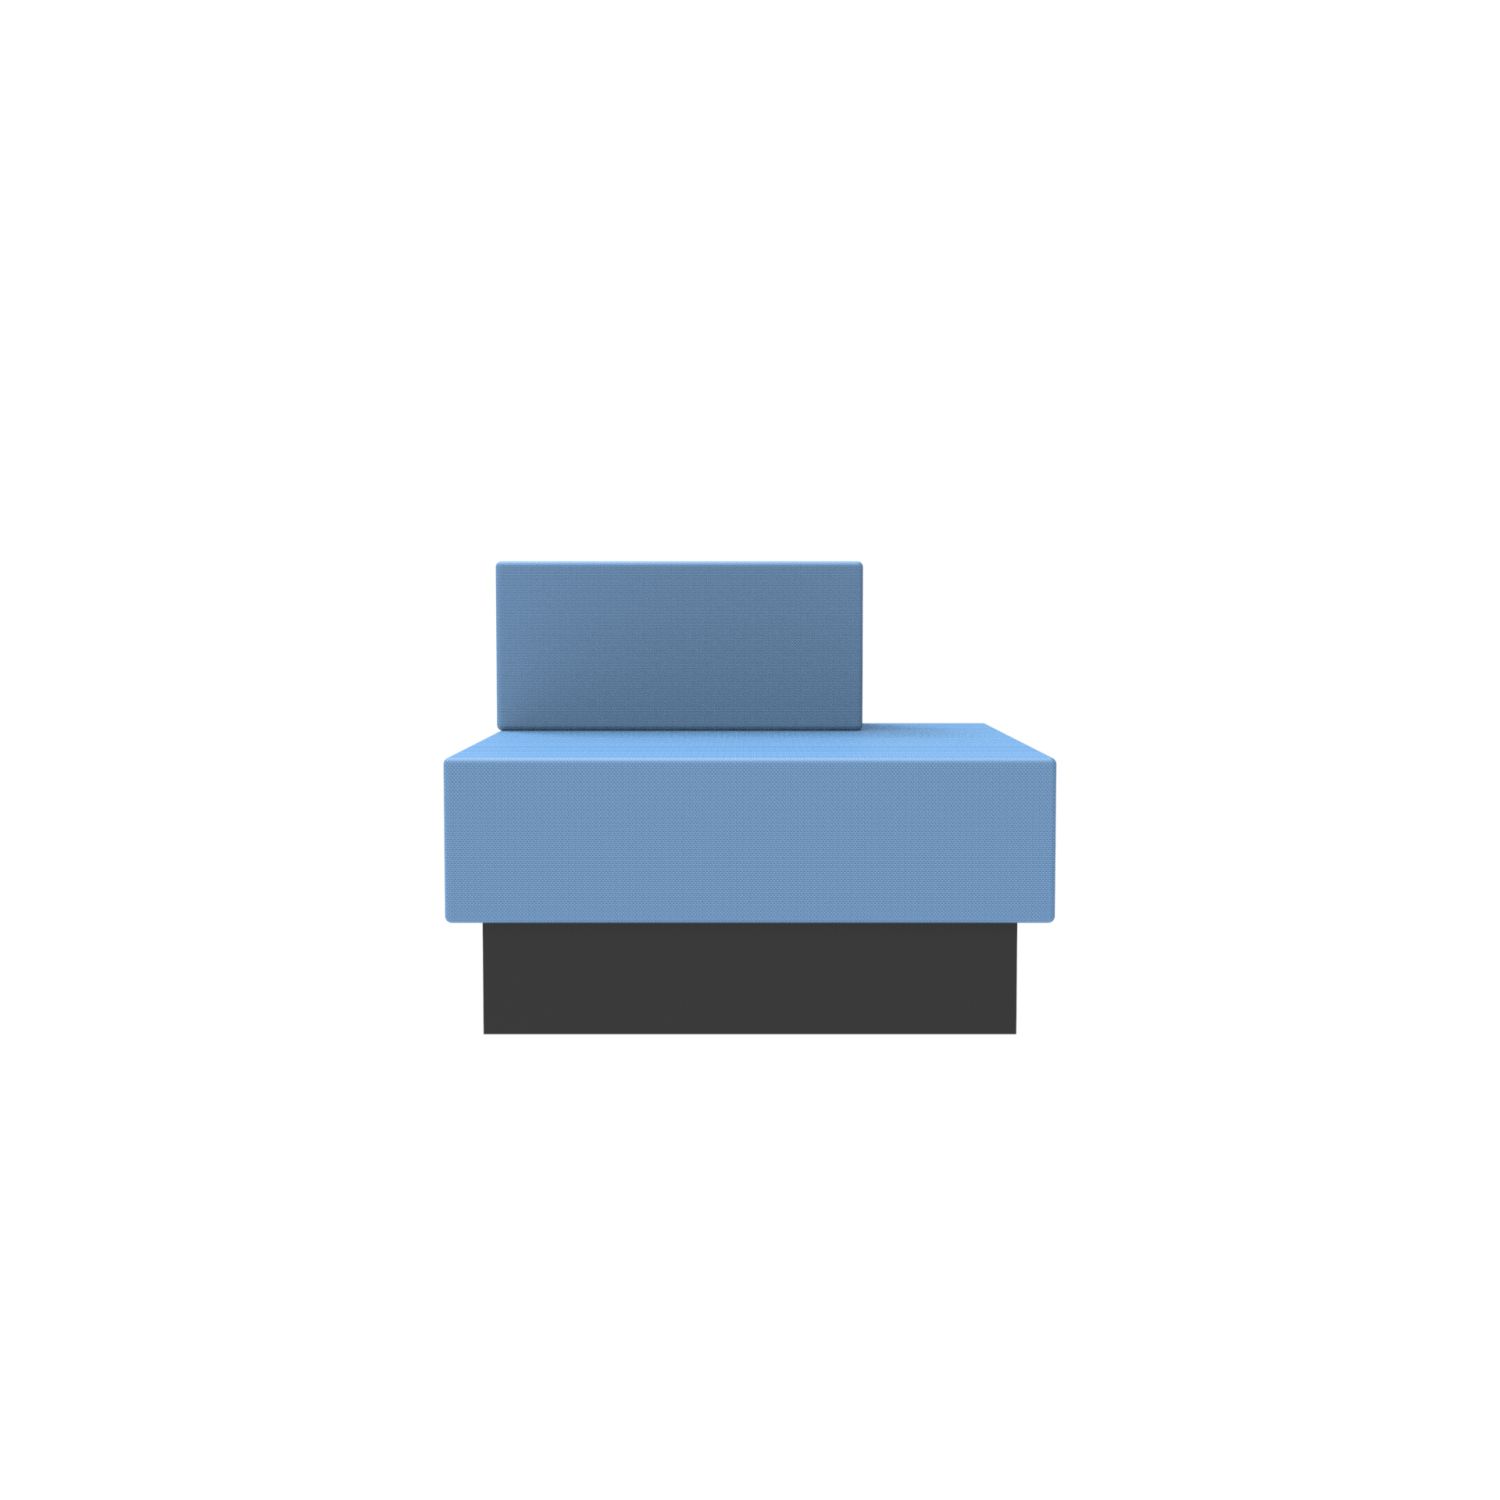 lensvelt oma blocks lounging edition closed base with backrest right 90 cm width blue horizon 040 black ral9005 hard leg ends